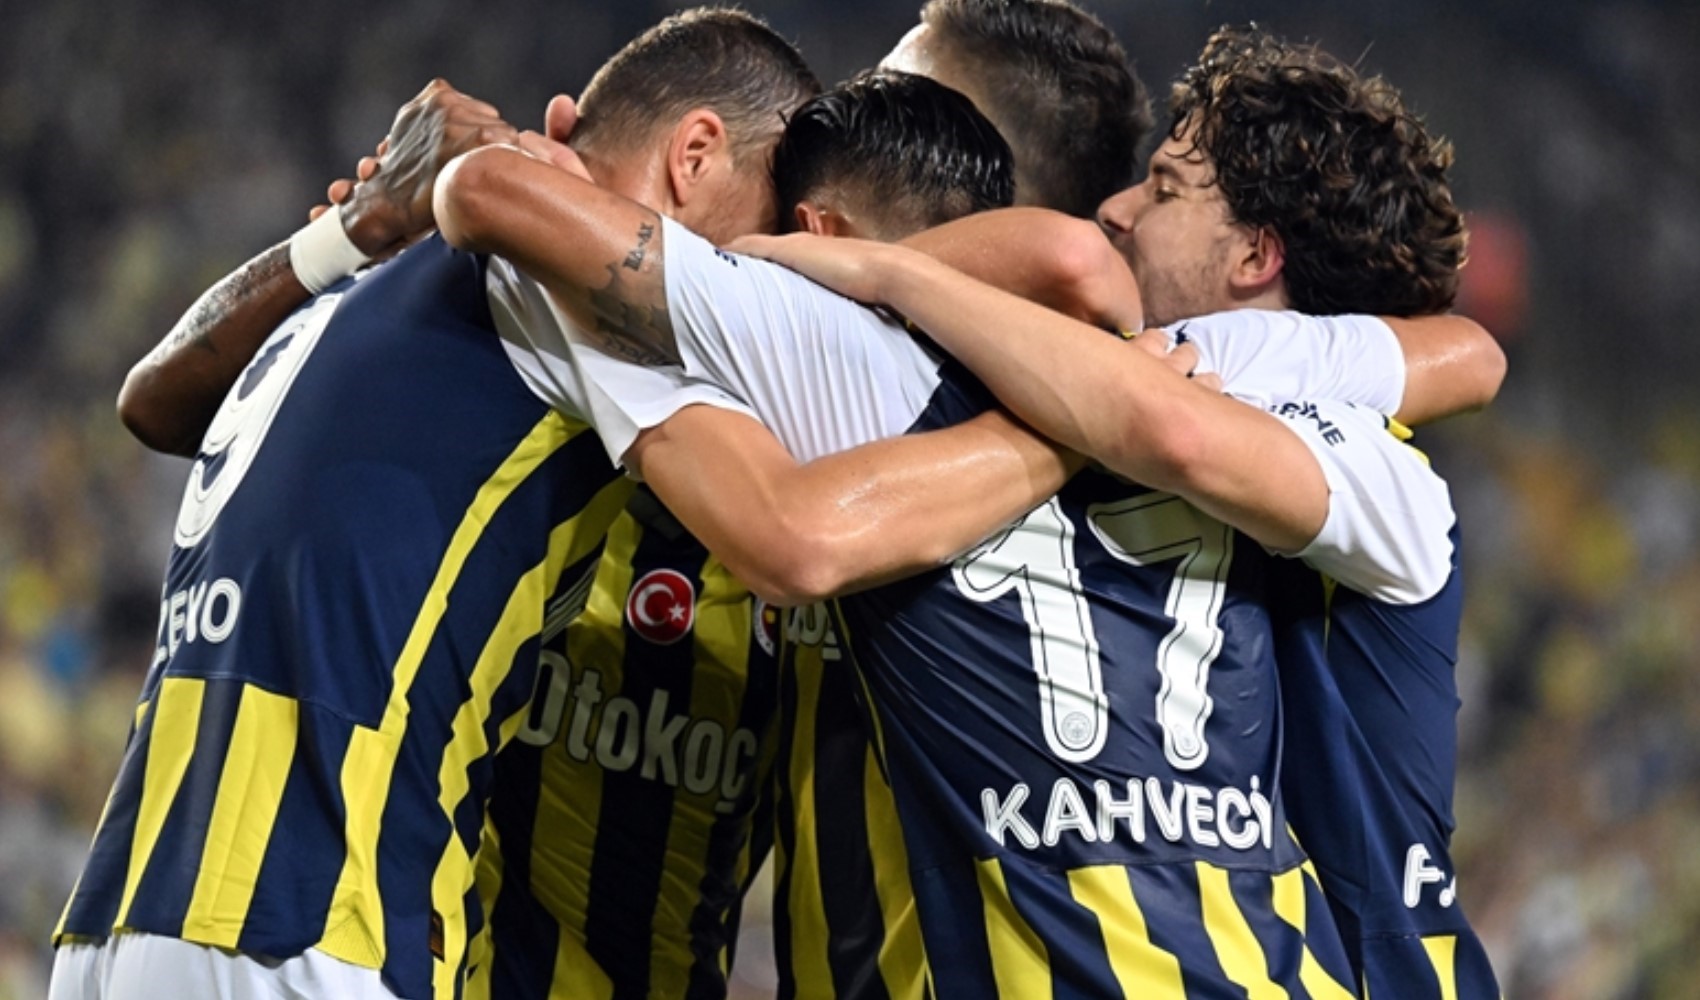 Fenerbahçeli futbolculardan İsmail Kartal'a veda mesajı